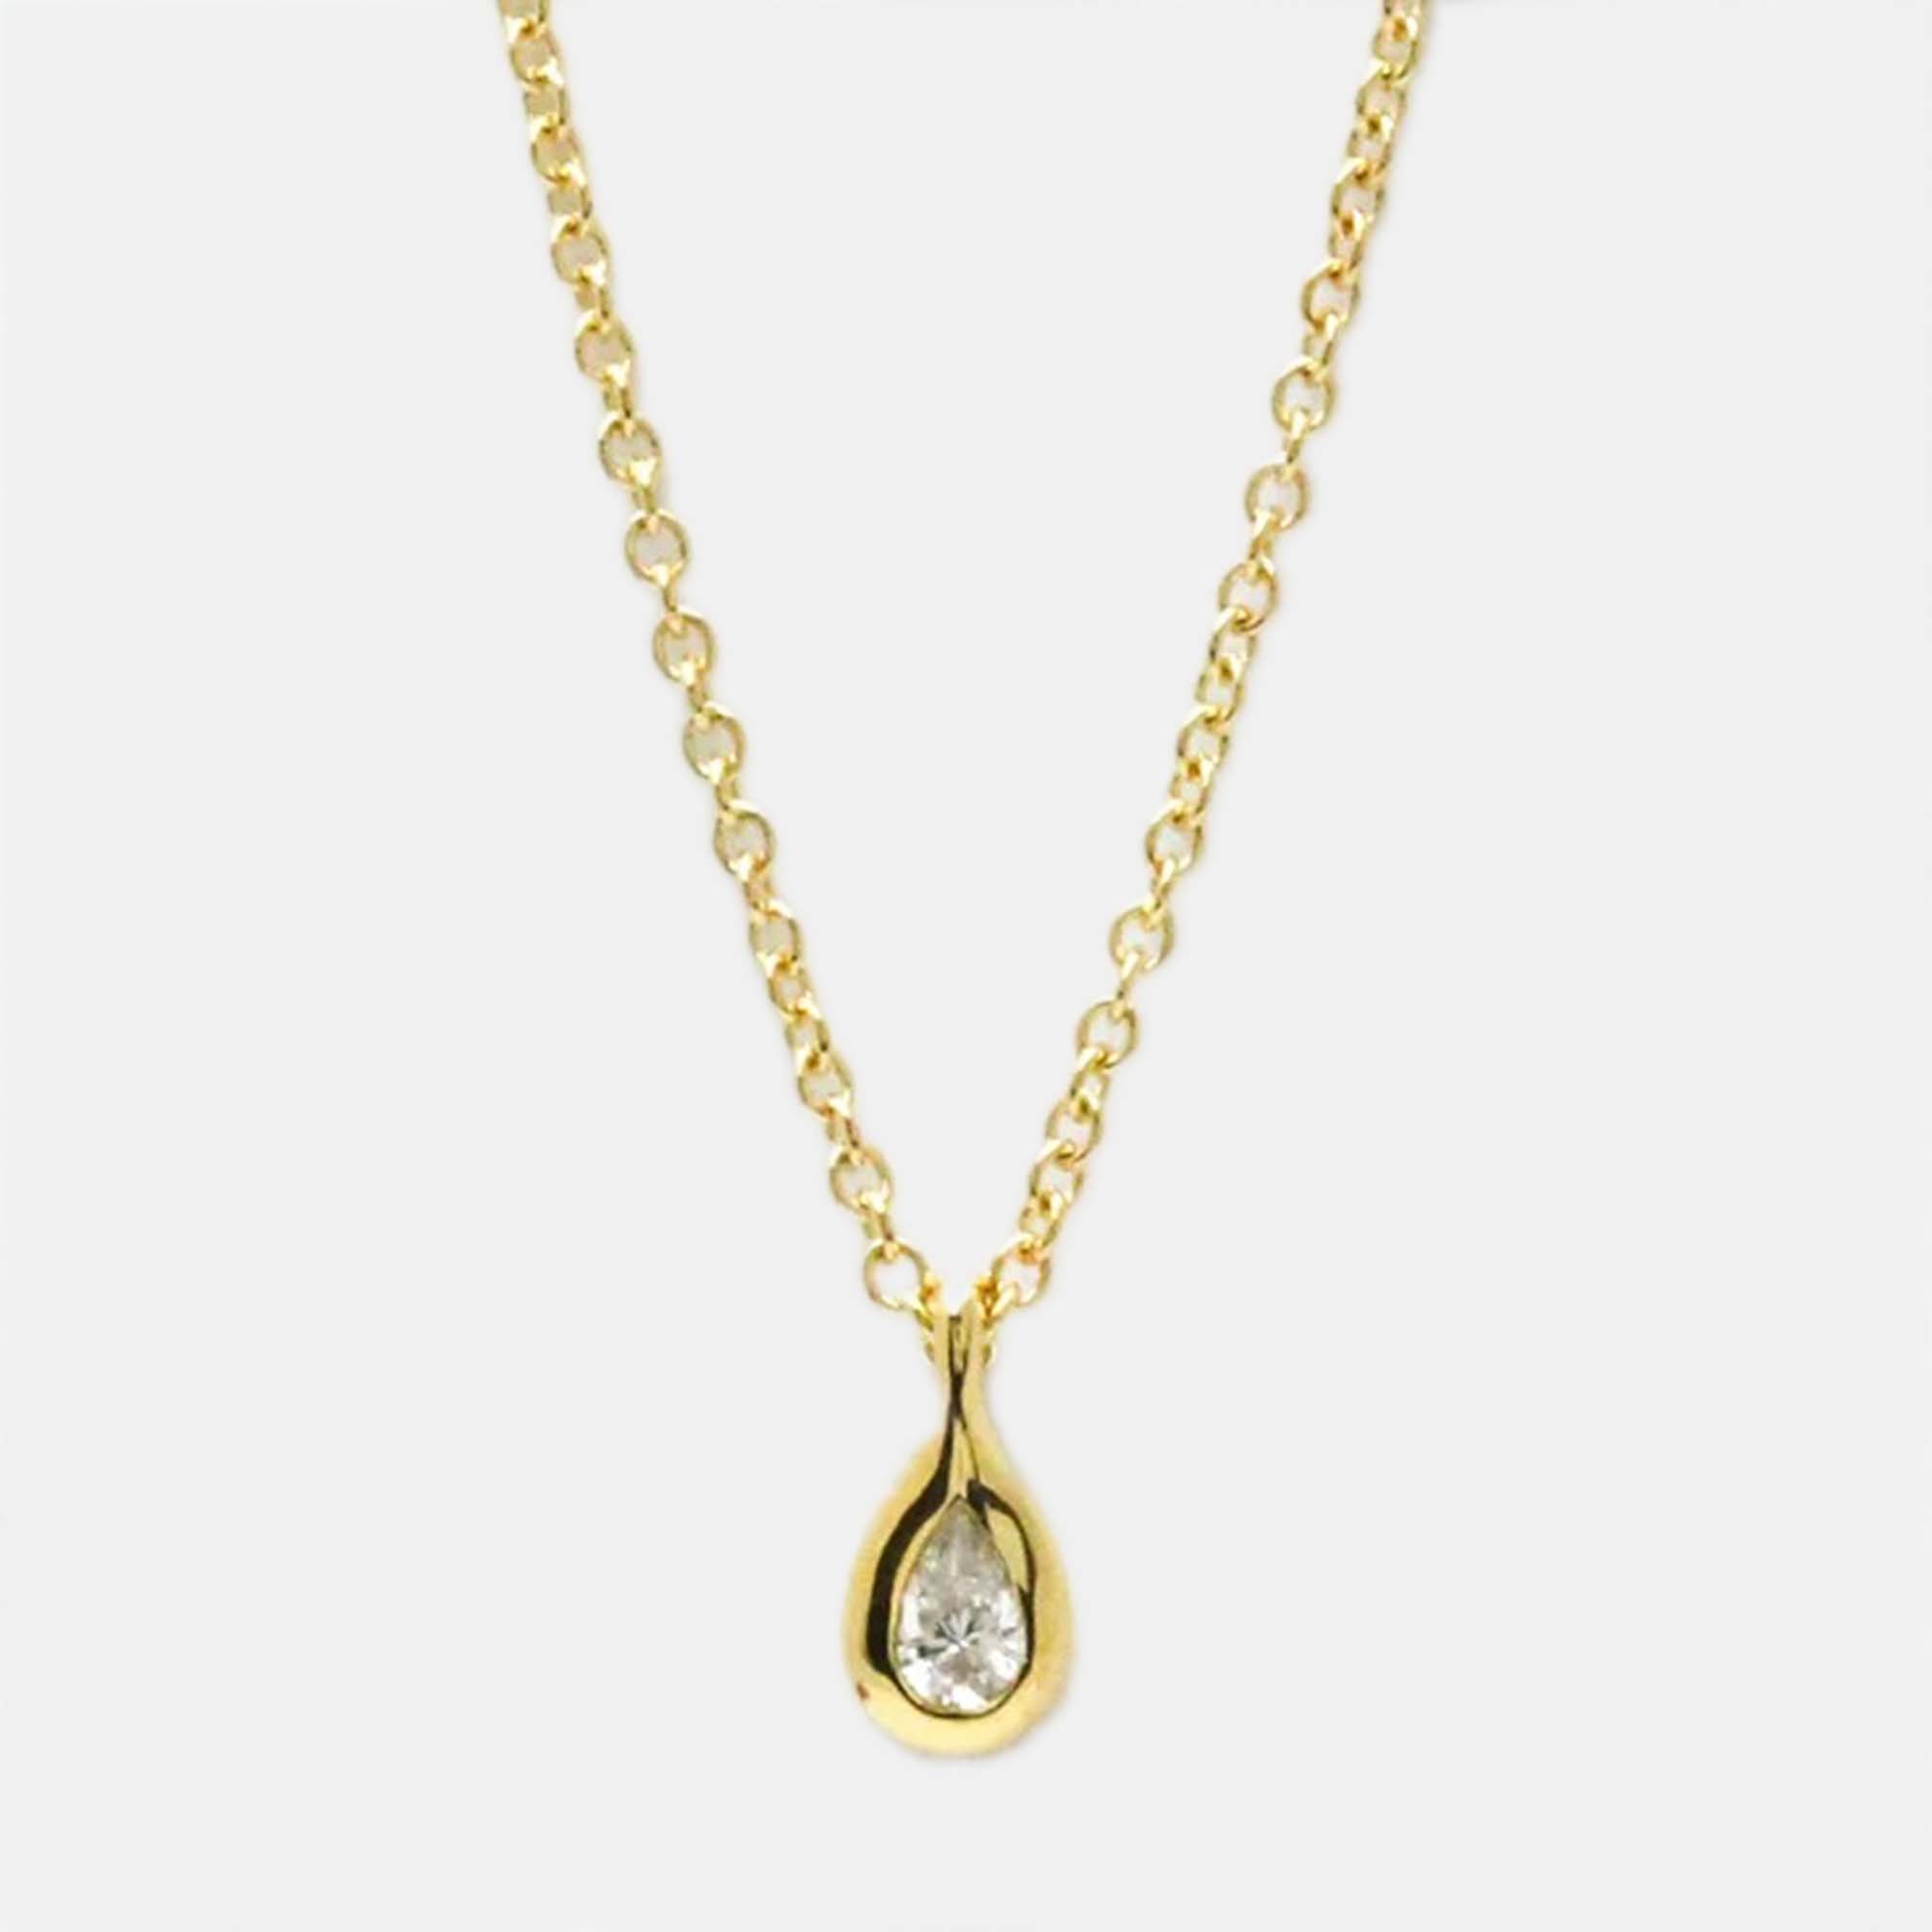 Tiffany & co. diamonds by the yard pear shape 18k yellow gold diamond necklace